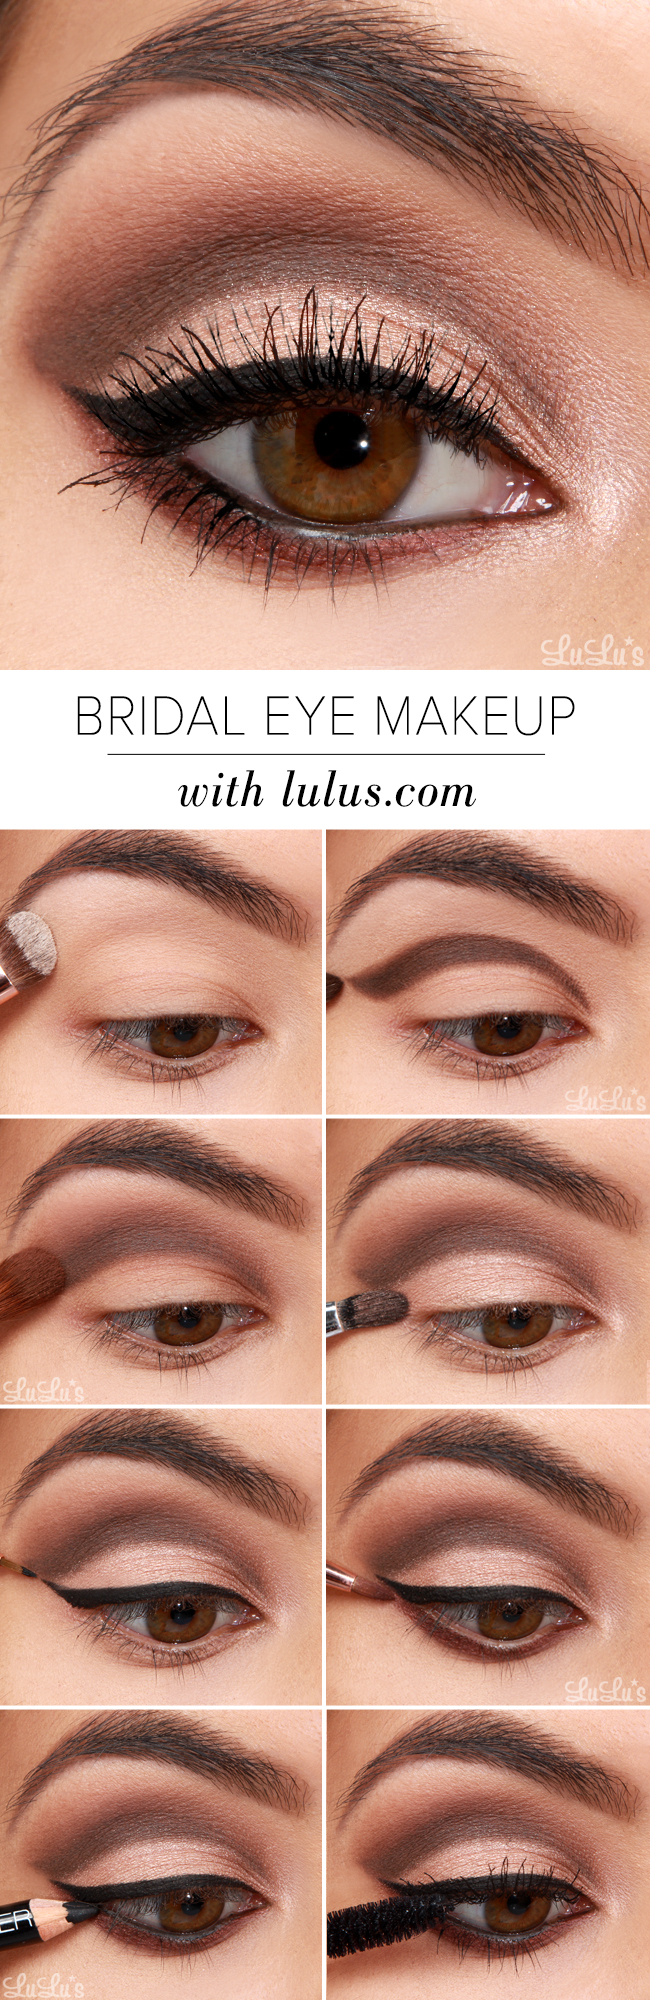 How To Do Wedding Eye Makeup Lulus How To Bridal Eye Makeup Tutorial Lulus Fashion Blog